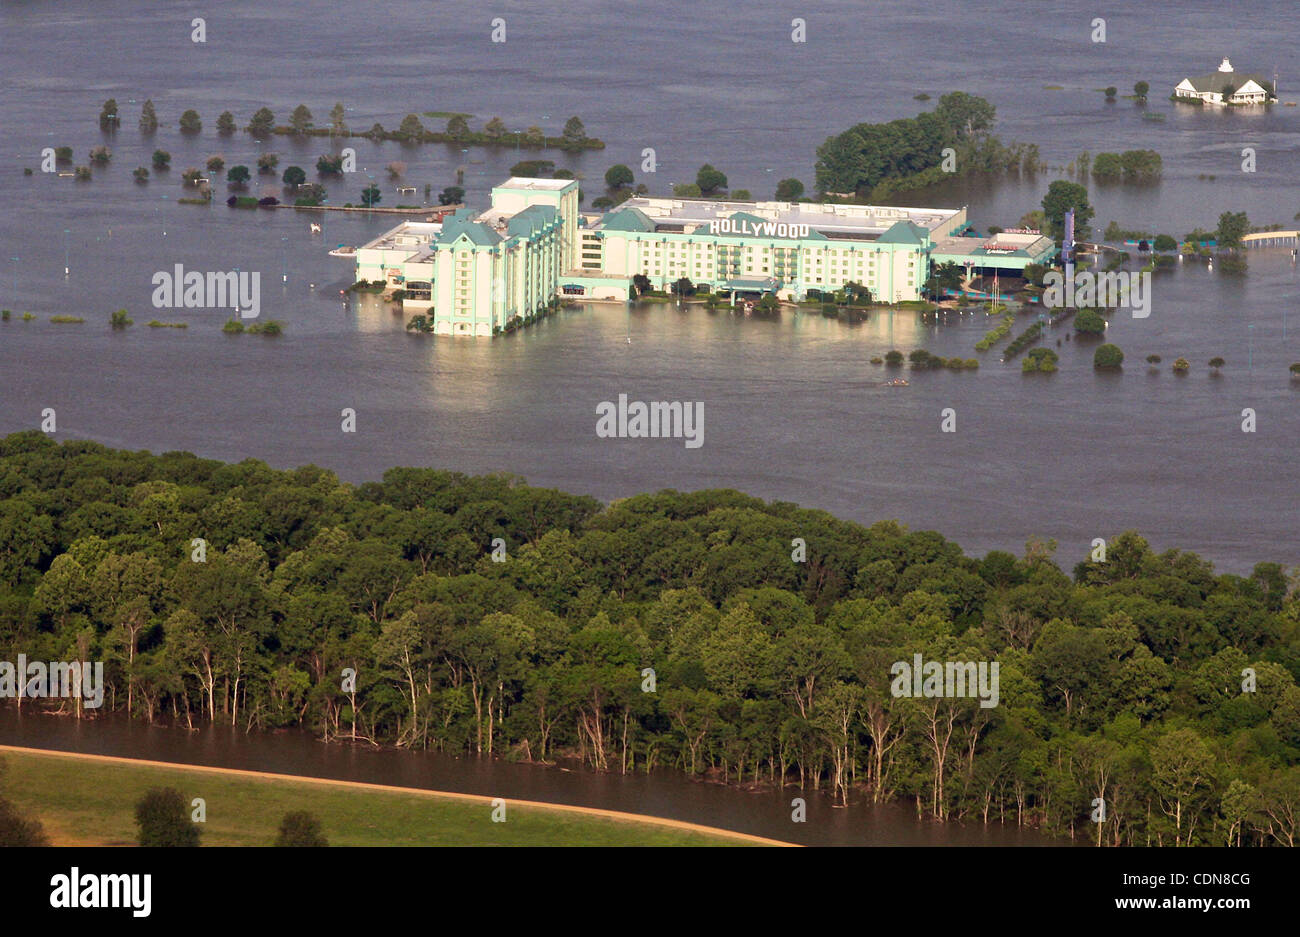 The Horseshoe Casino-Hotel in Tunica, Mississippi Stock Photo - Alamy